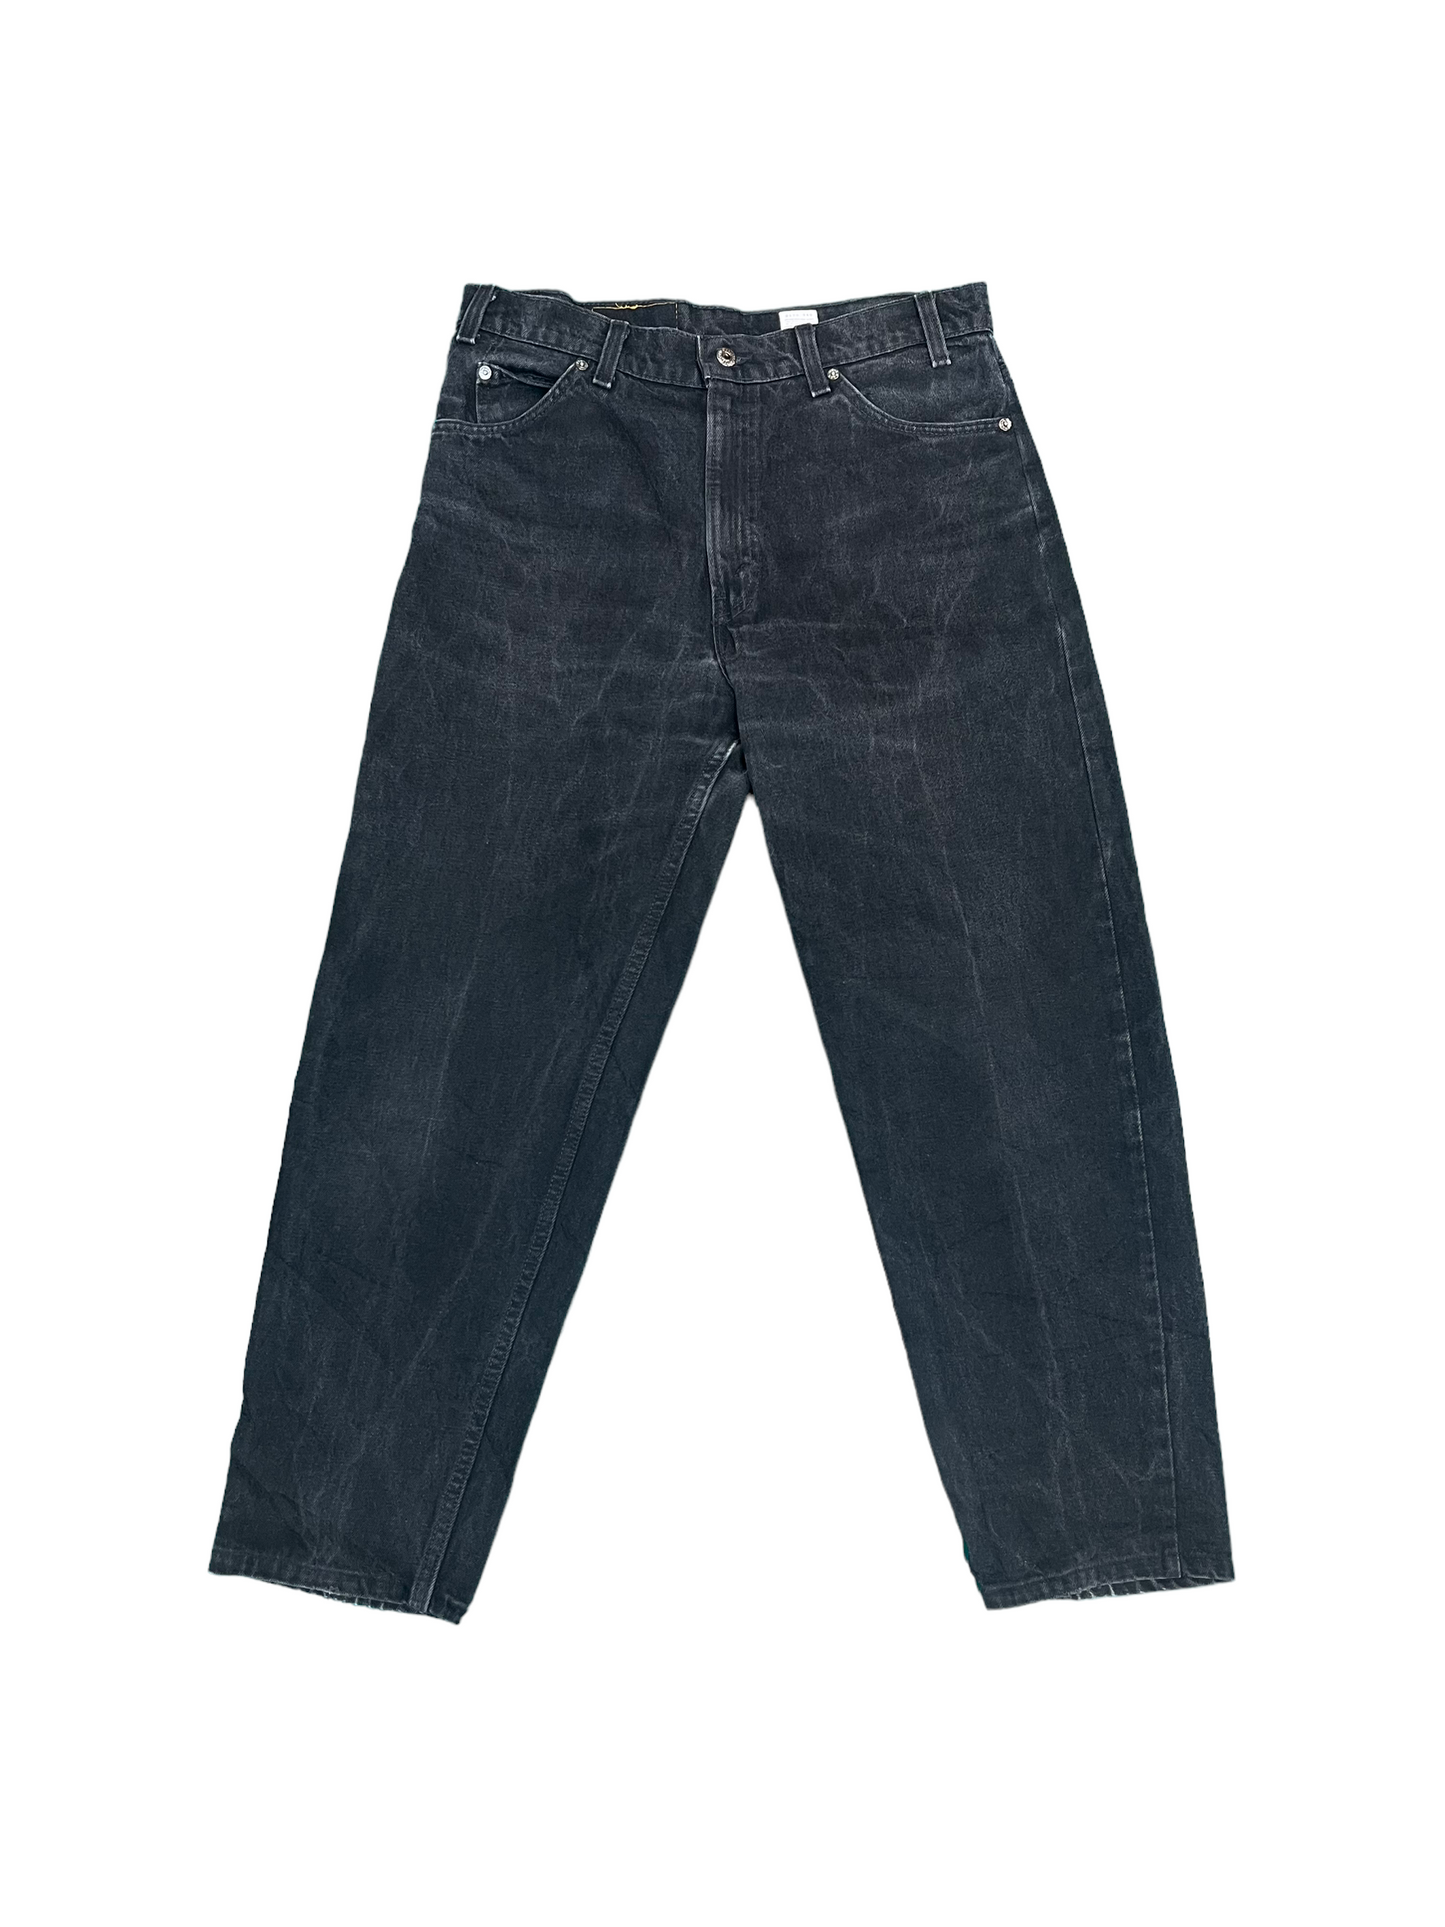 Mens Denim Jeans - Waist 34" Length 32"